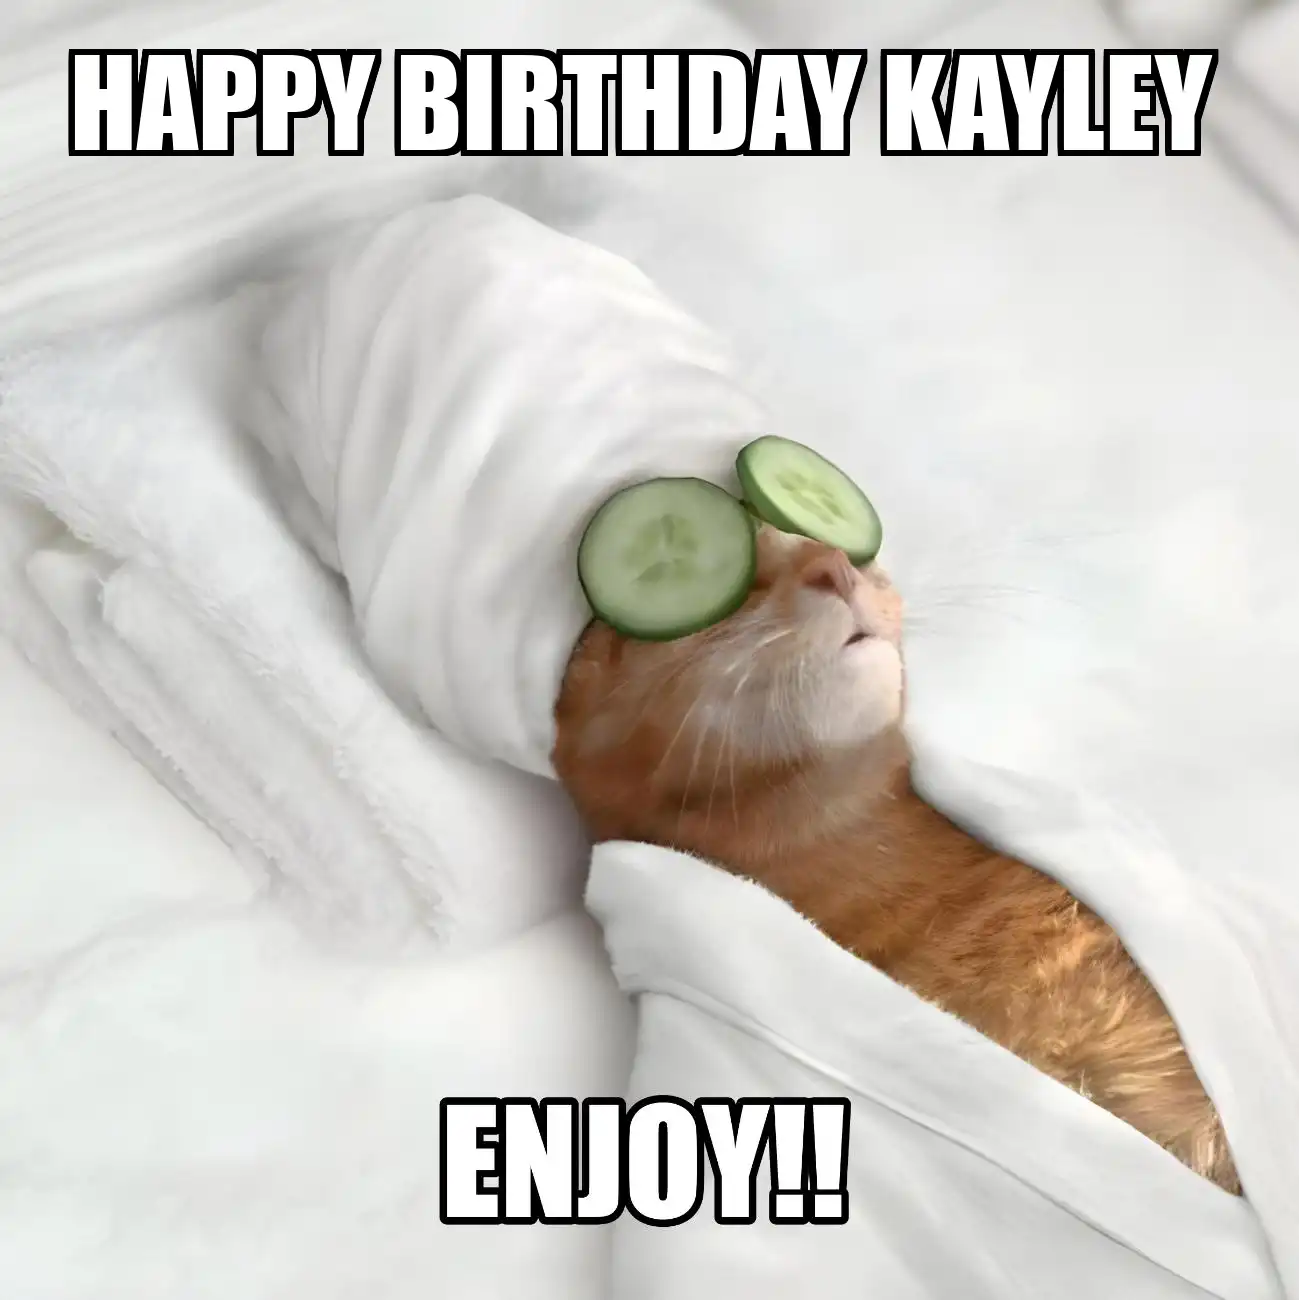 Happy Birthday Kayley Enjoy Cat Meme